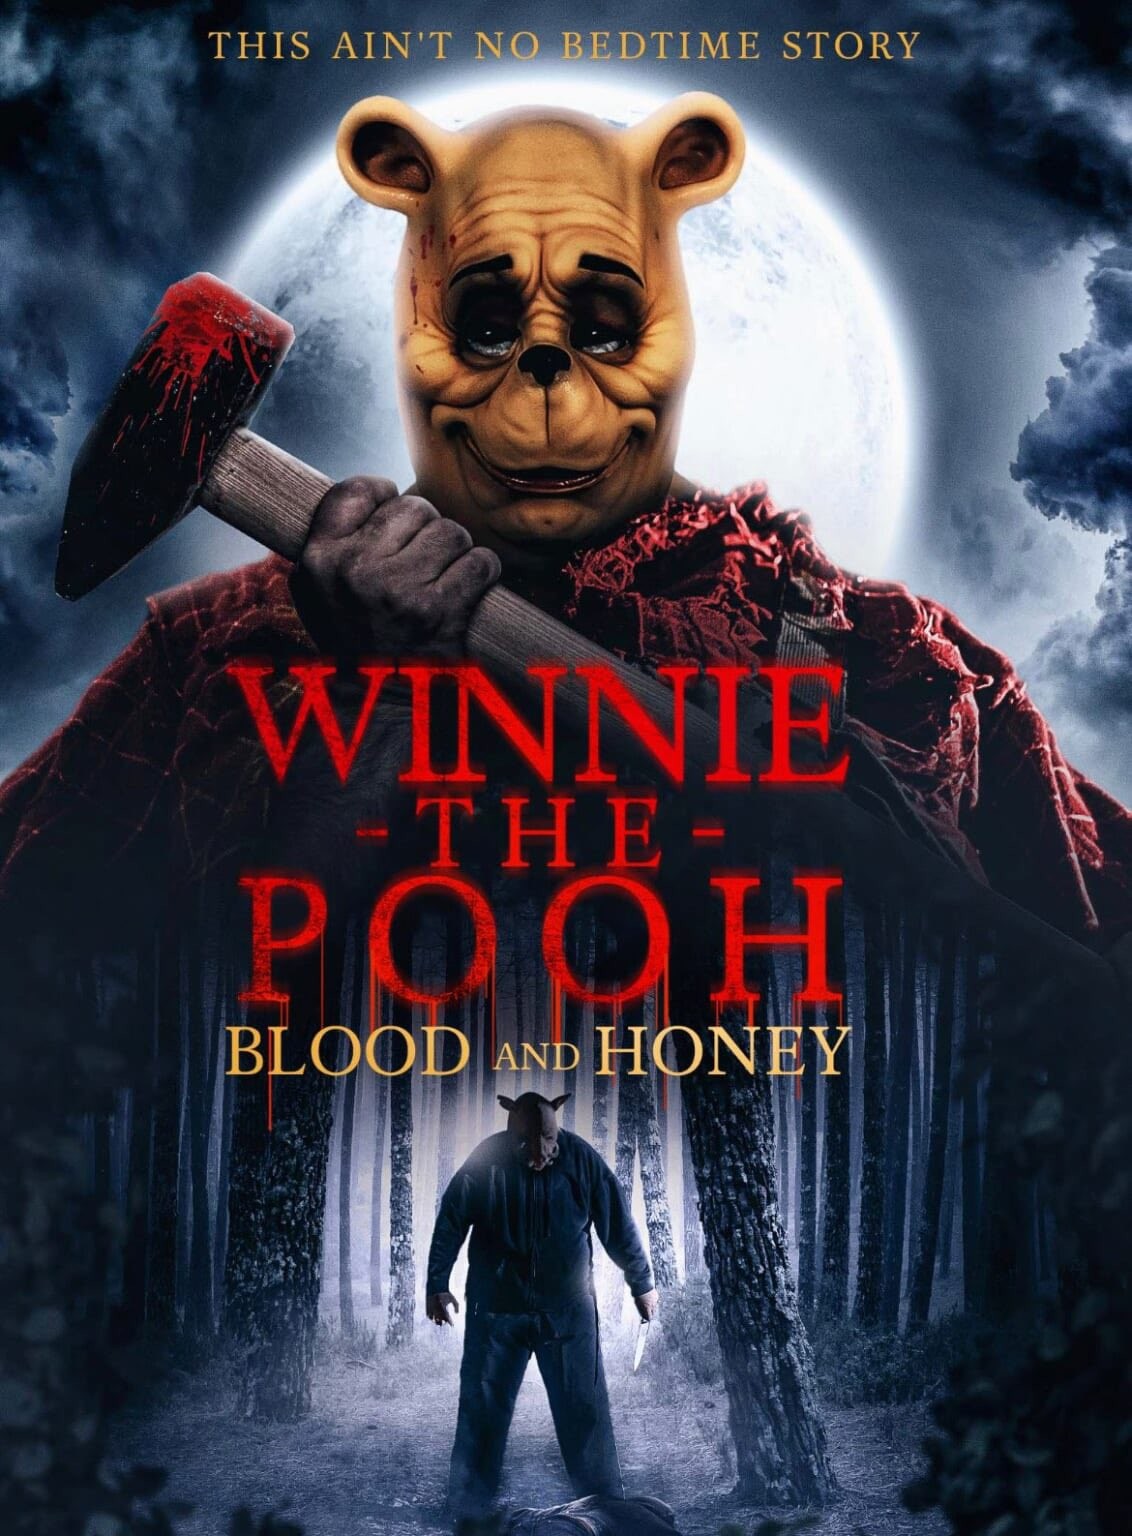 Plakat do filmu Winnie the pooh: Blood and honey od Jagged Edge.jpg